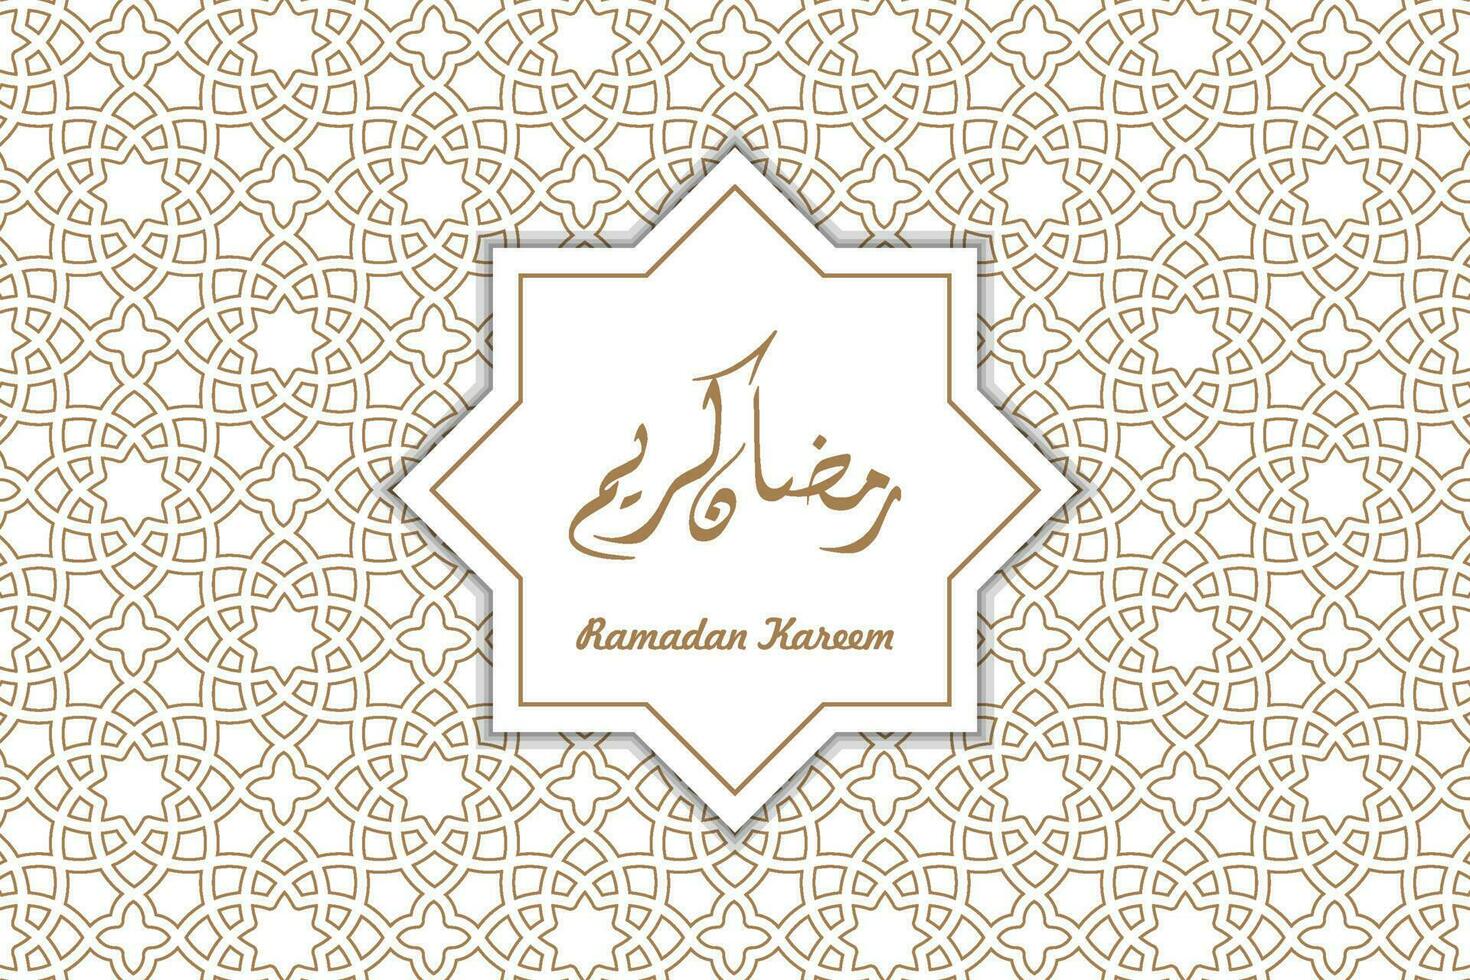 ramadan backgrounds vector, Ramadan kareem Translation of text Ramadan Kareem gold pattern background,  modern background vector illustration